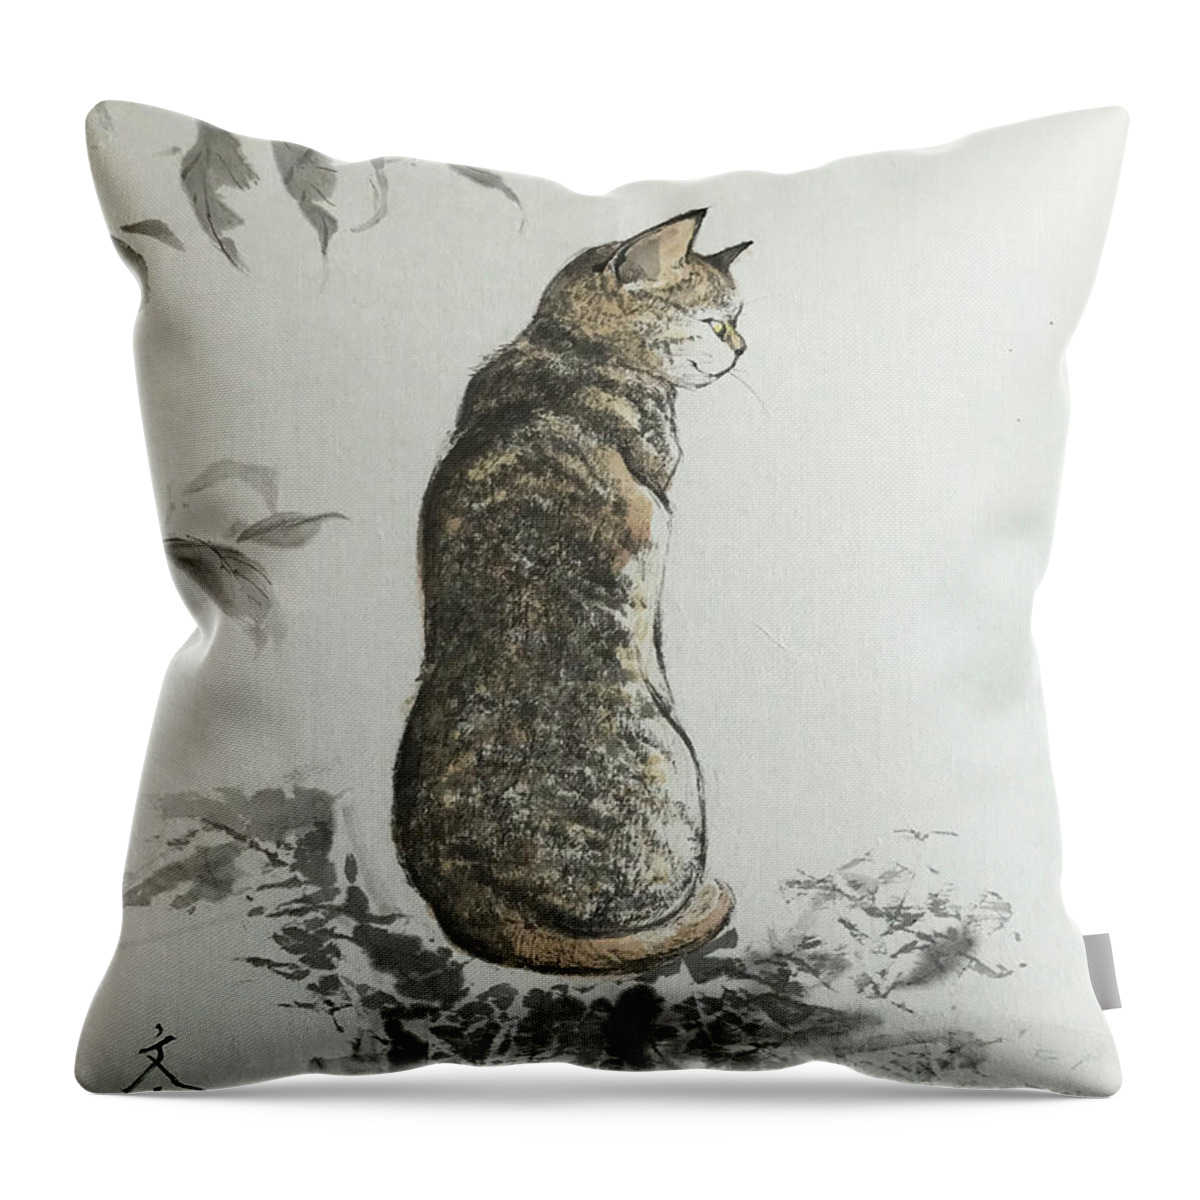 Japanese Throw Pillow featuring the painting Mikaeri Cat by Fumiyo Yoshikawa